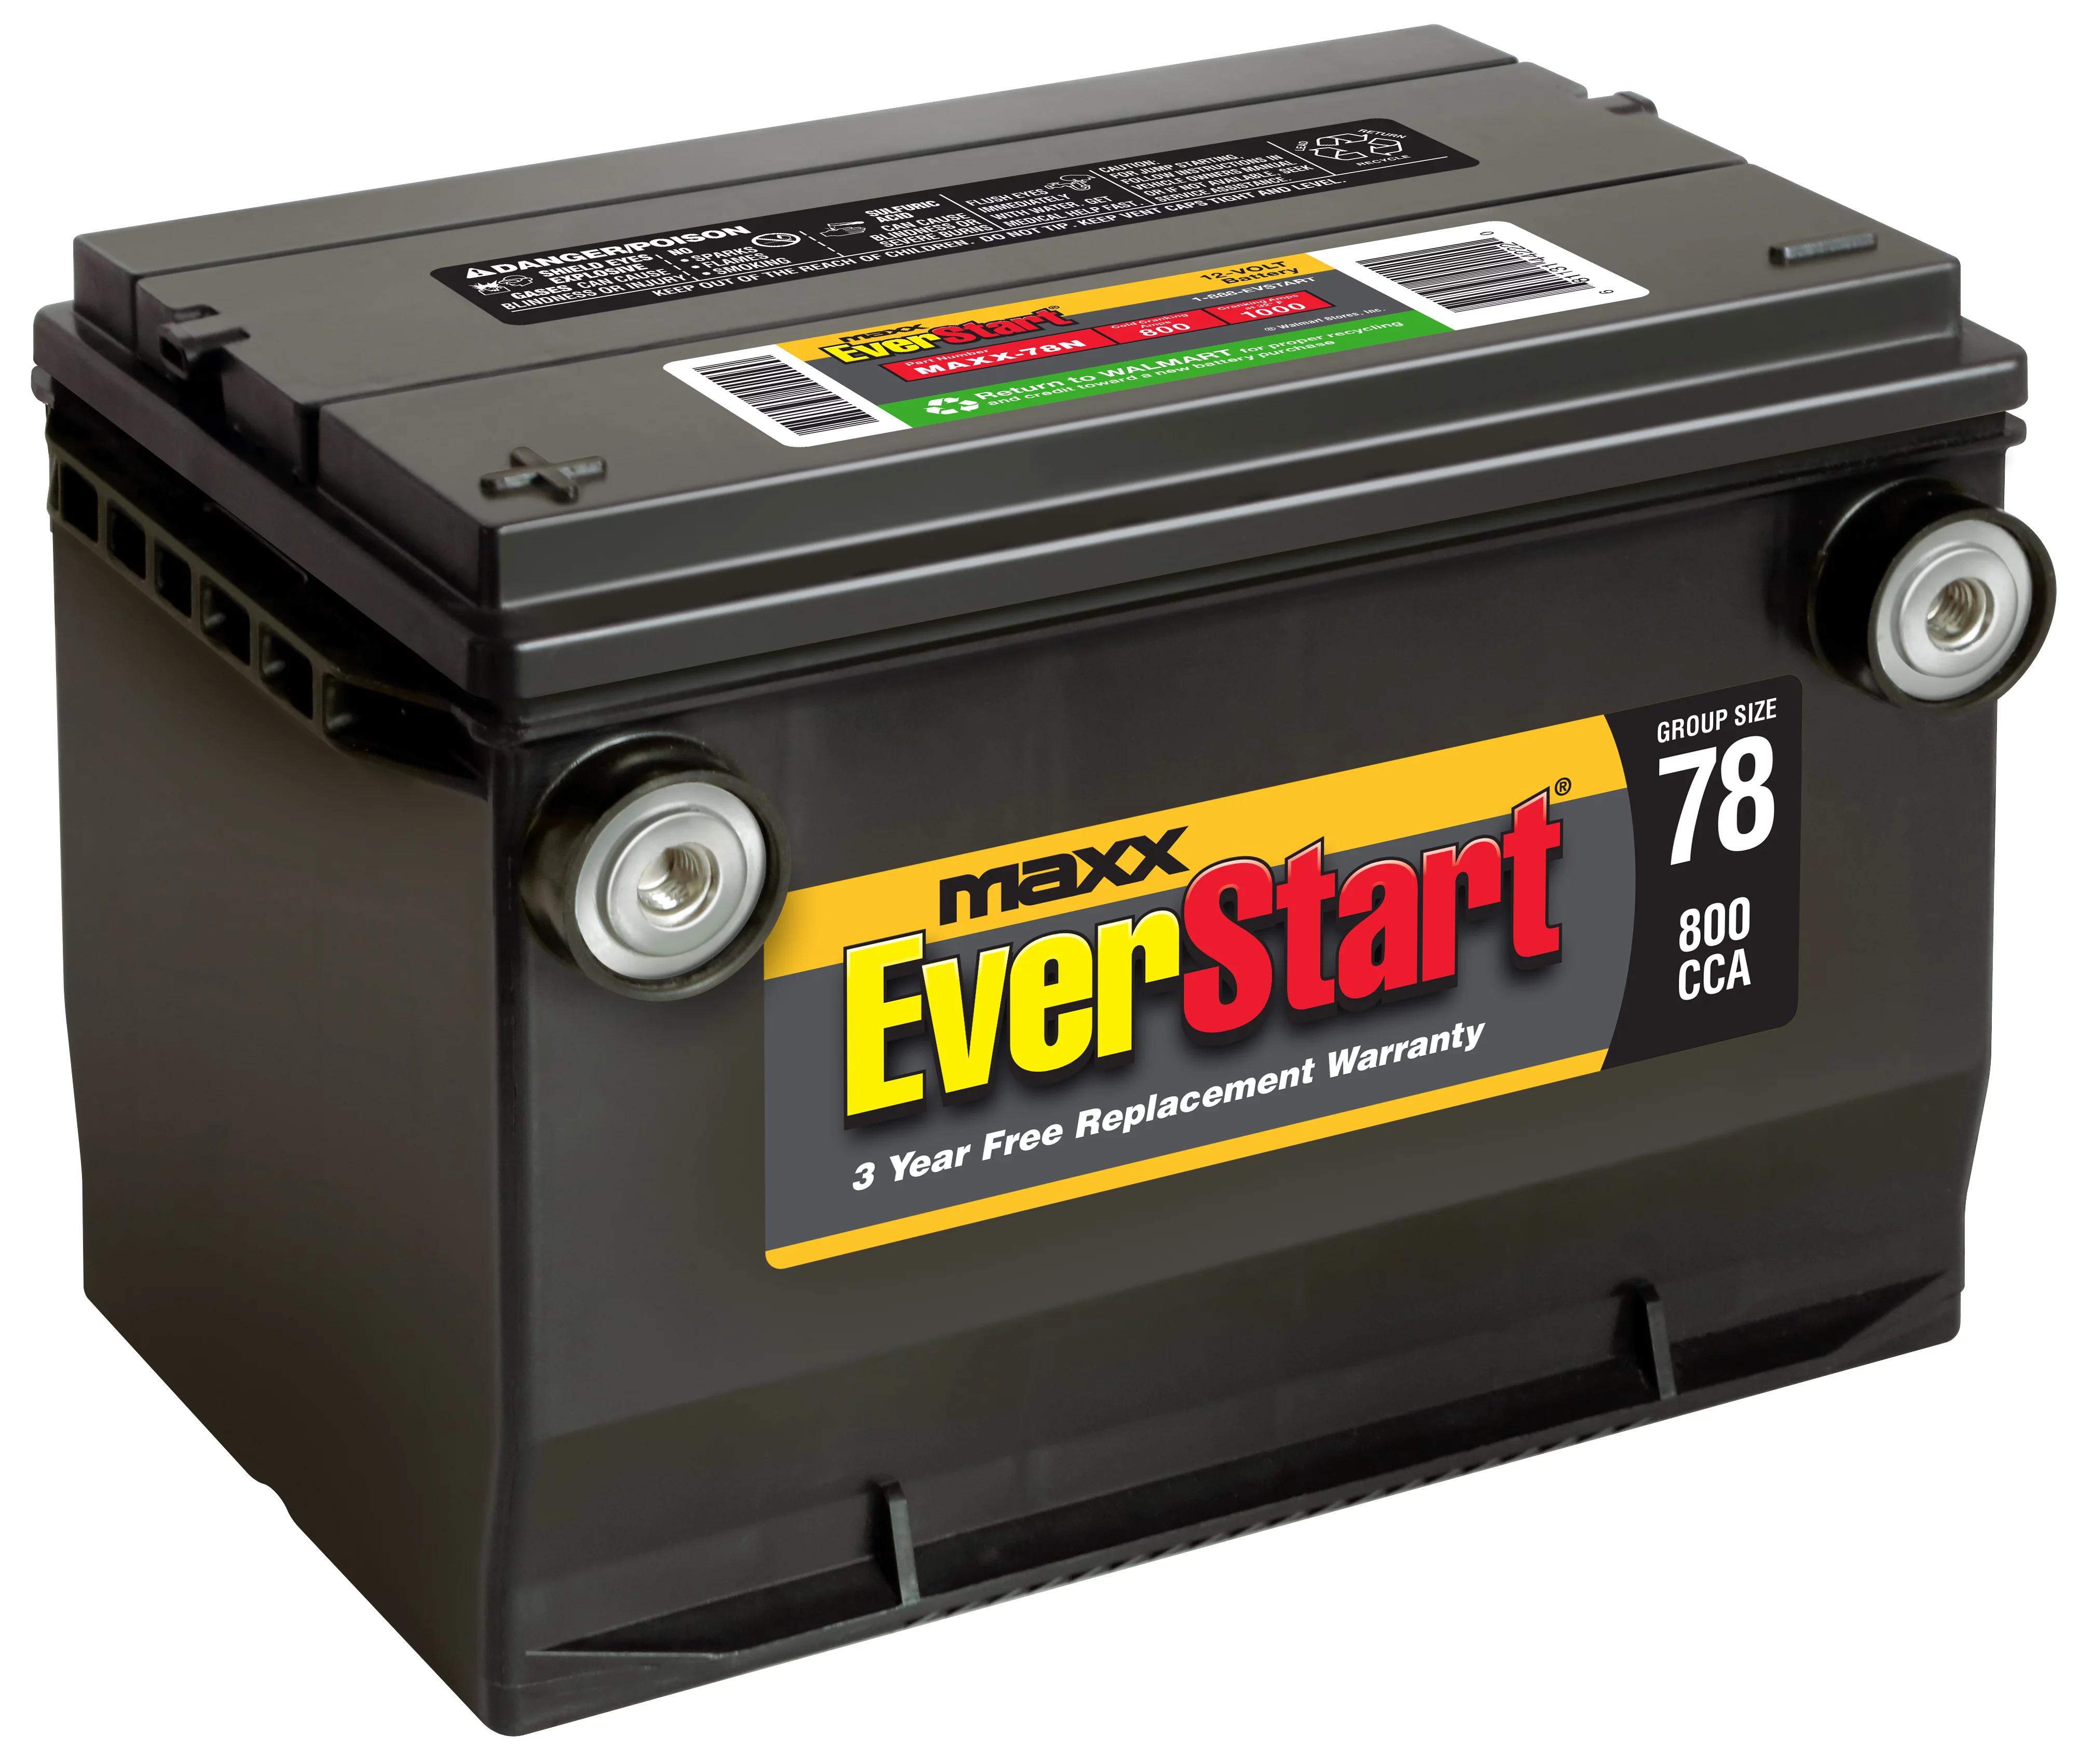 EverStart Maxx Lead Acid Automotive Battery, Group Size 78N (12 Volt/800 CCA)